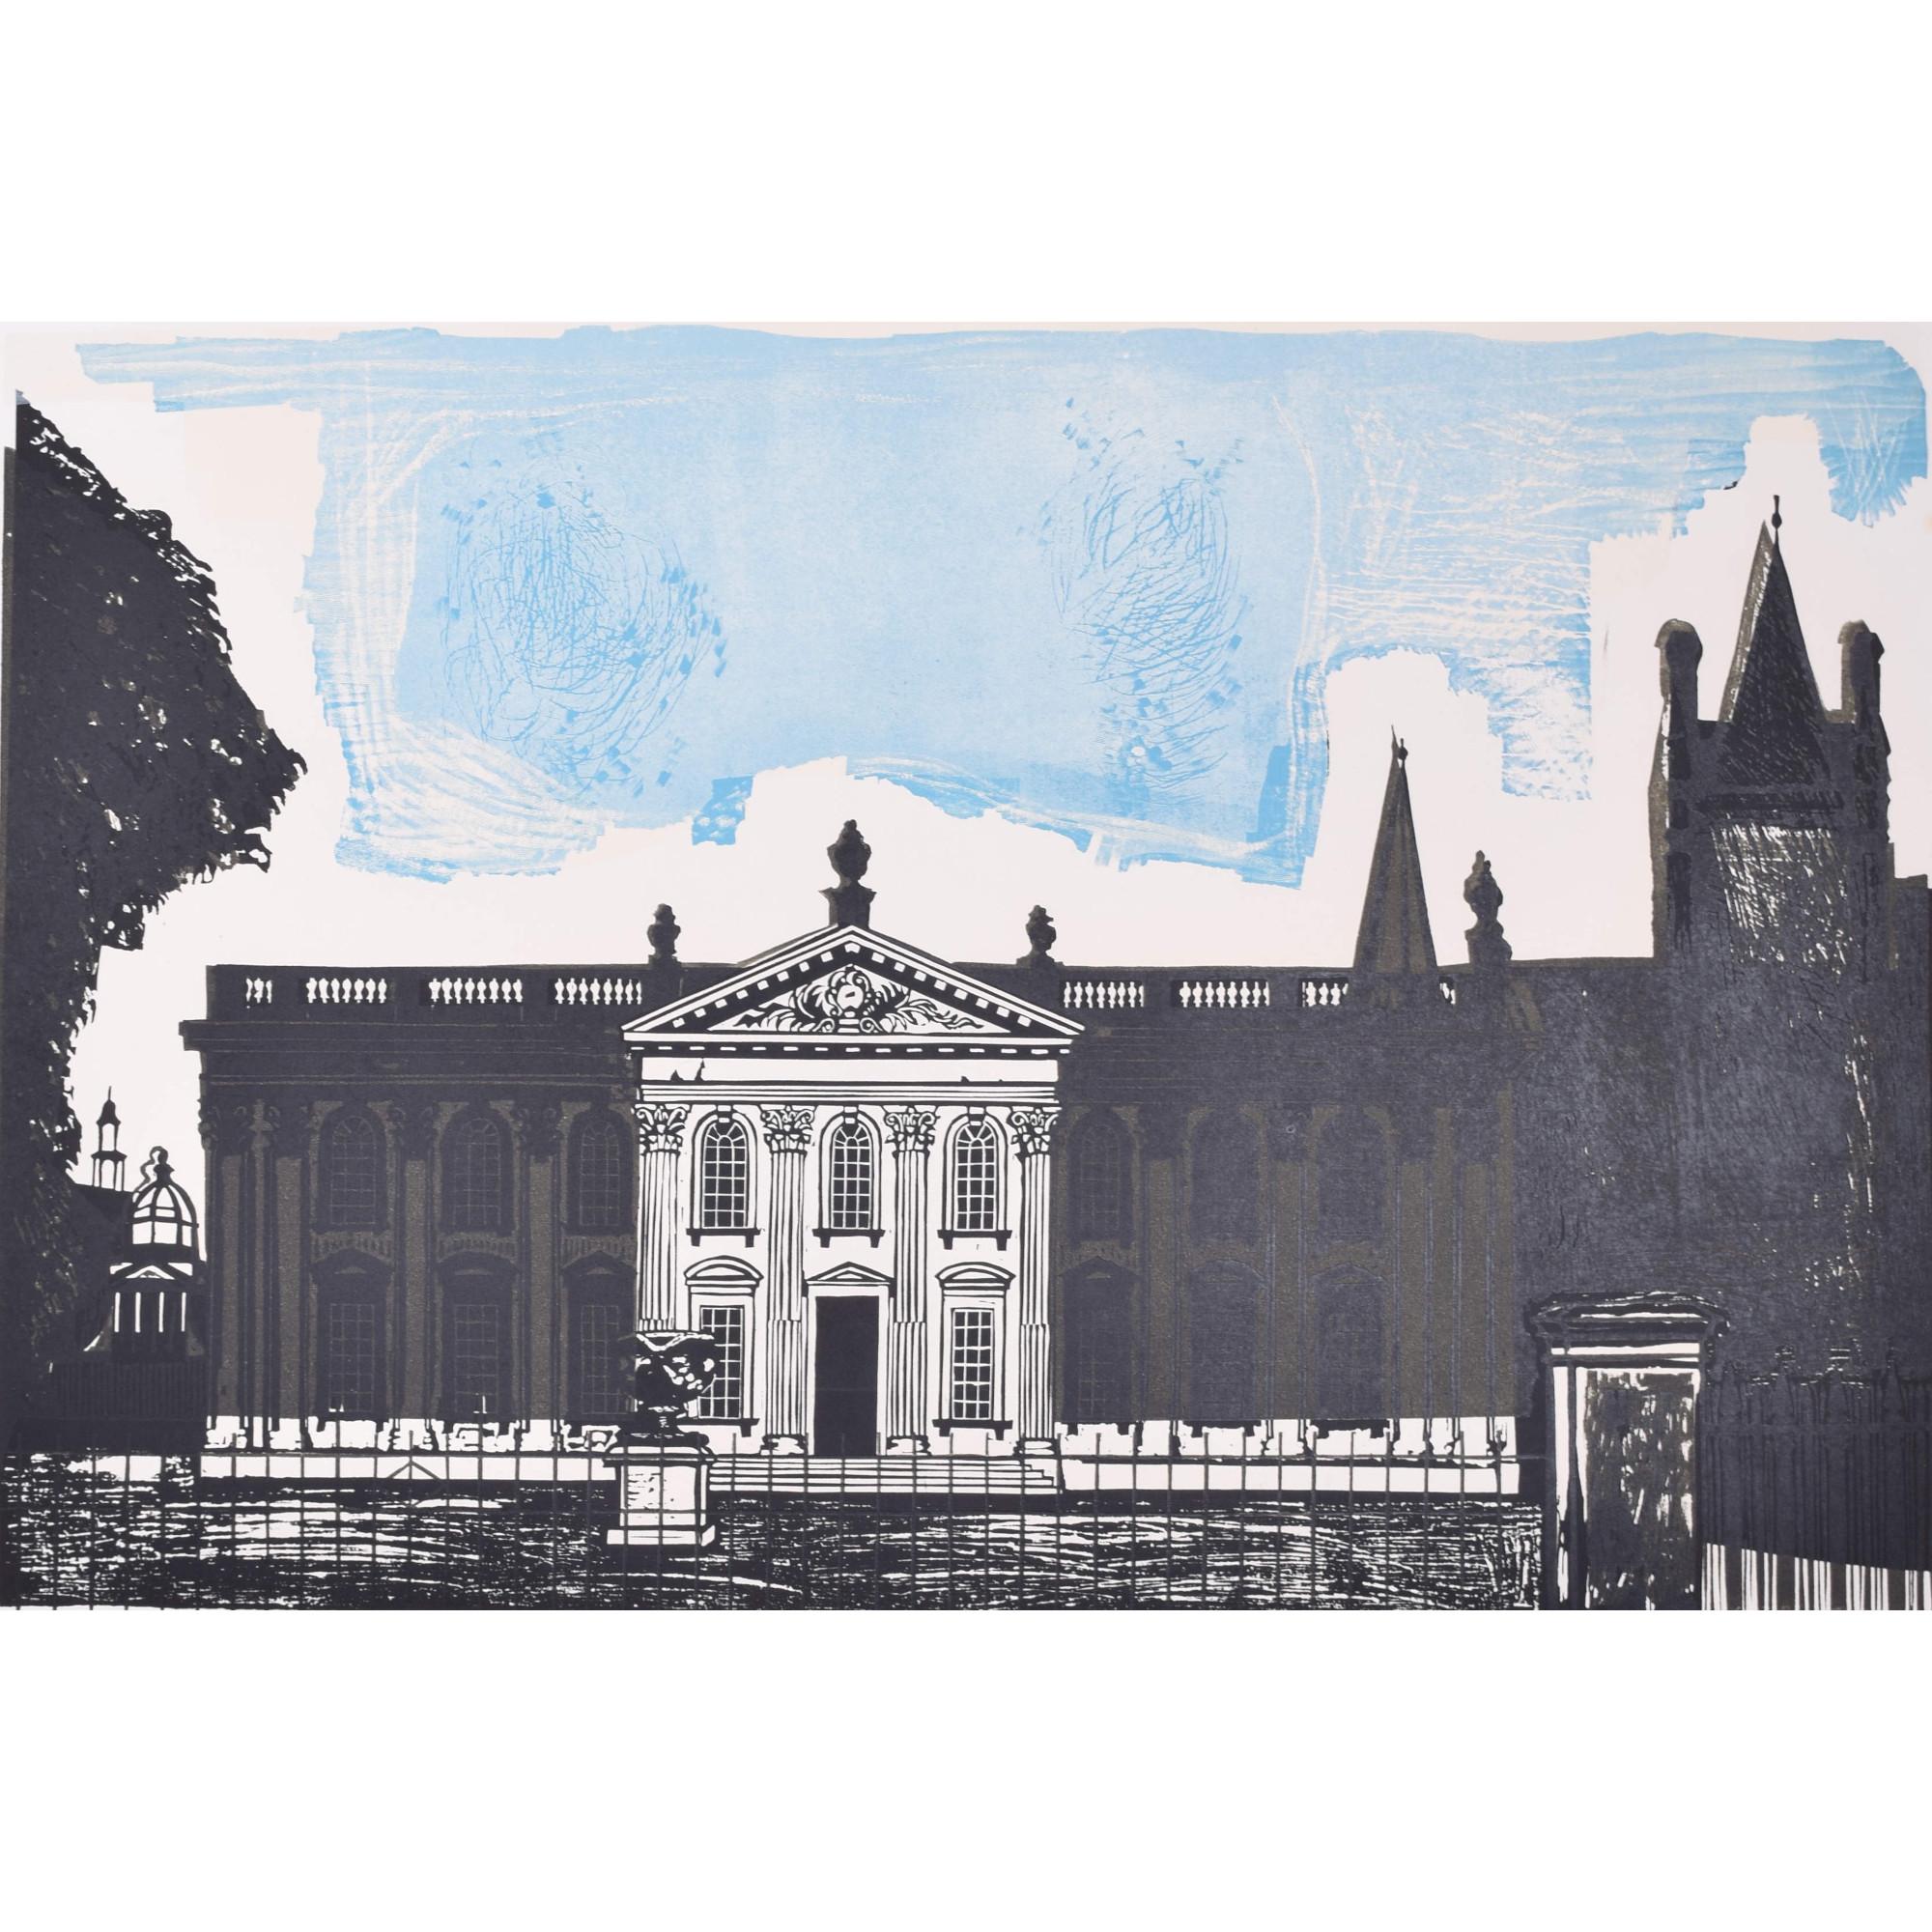 Senate House, Cambridge University linocut print by Walter Hoyle